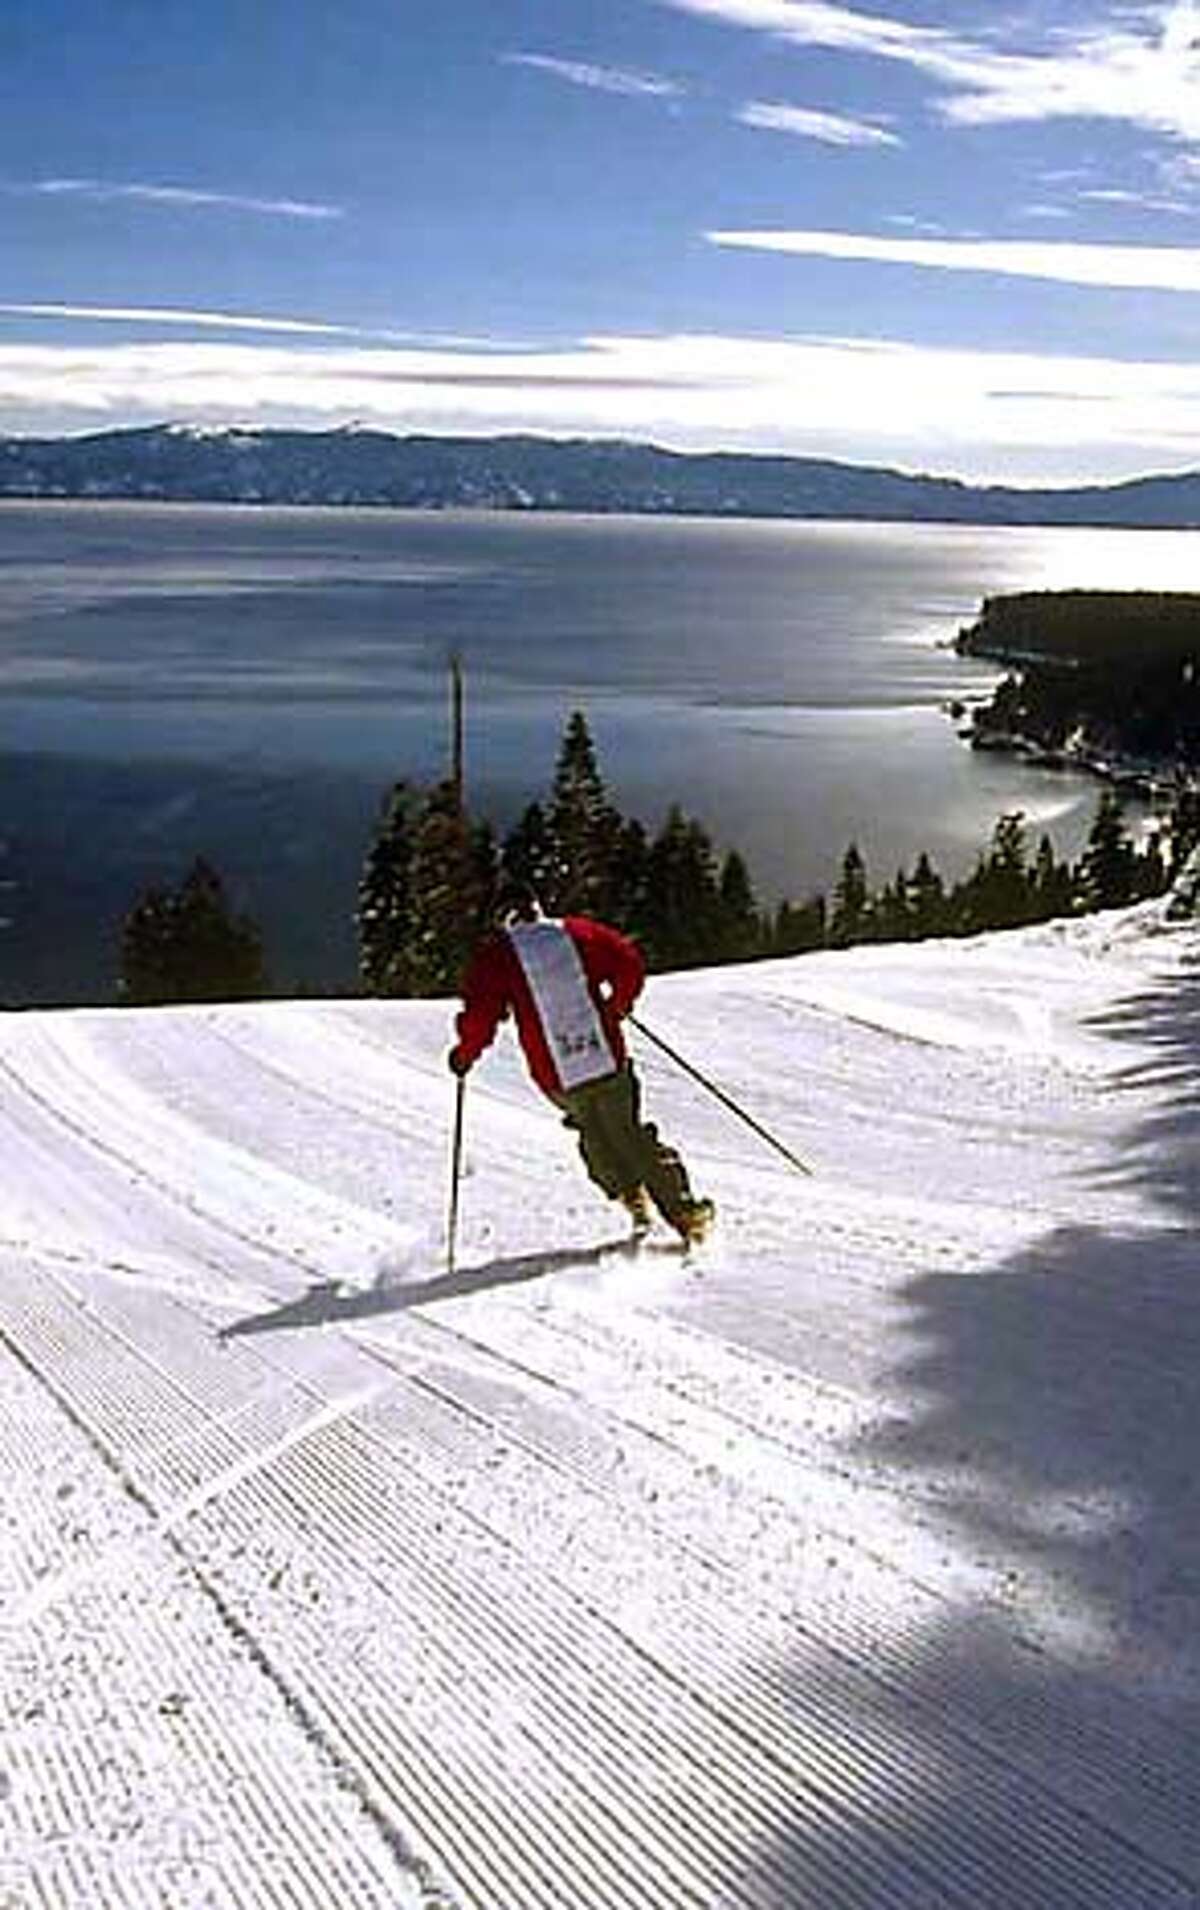 Homewood Ski Resort Travel#Travel#Chronicle#11/7/2004#ALL#Advance##0422407569